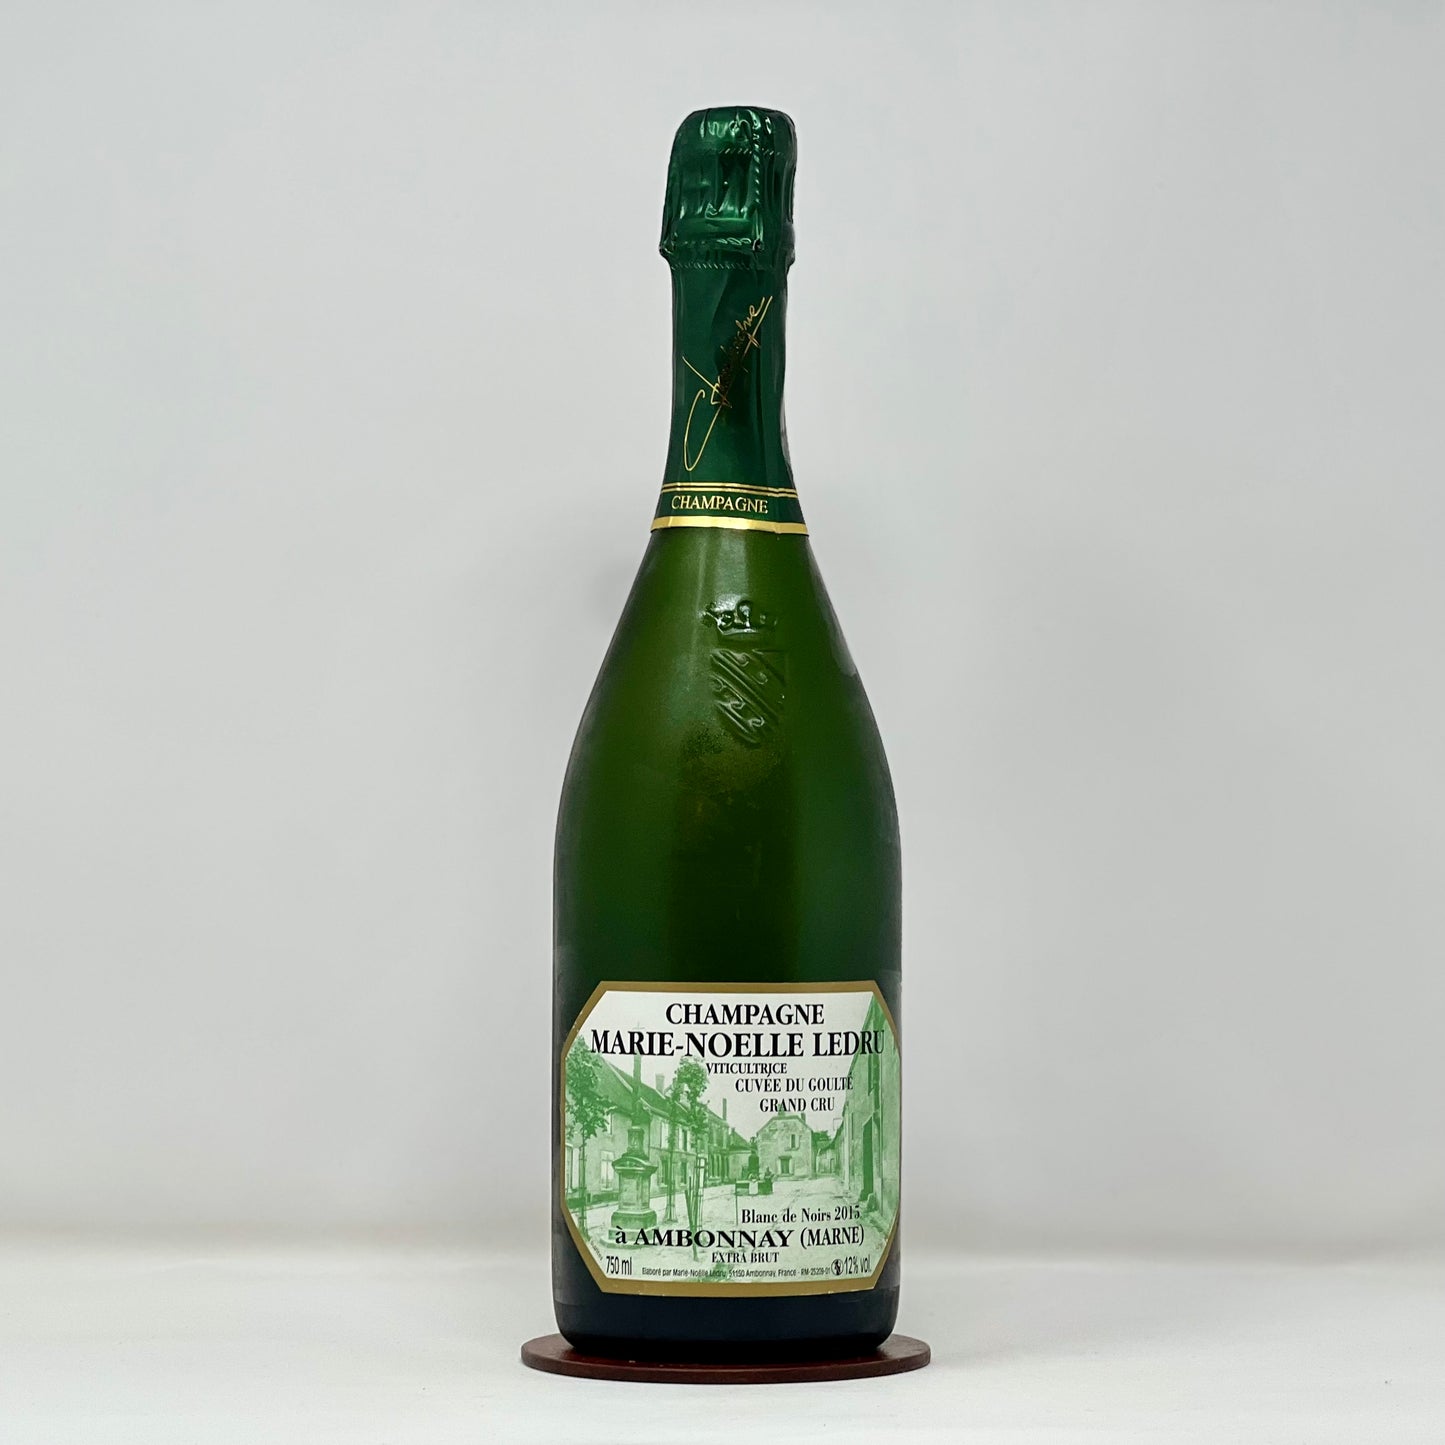 MARIE-NÖELLE LEDRU - "Cuvée de Goulte" Grand Cru Champagne Extra Brut 2015